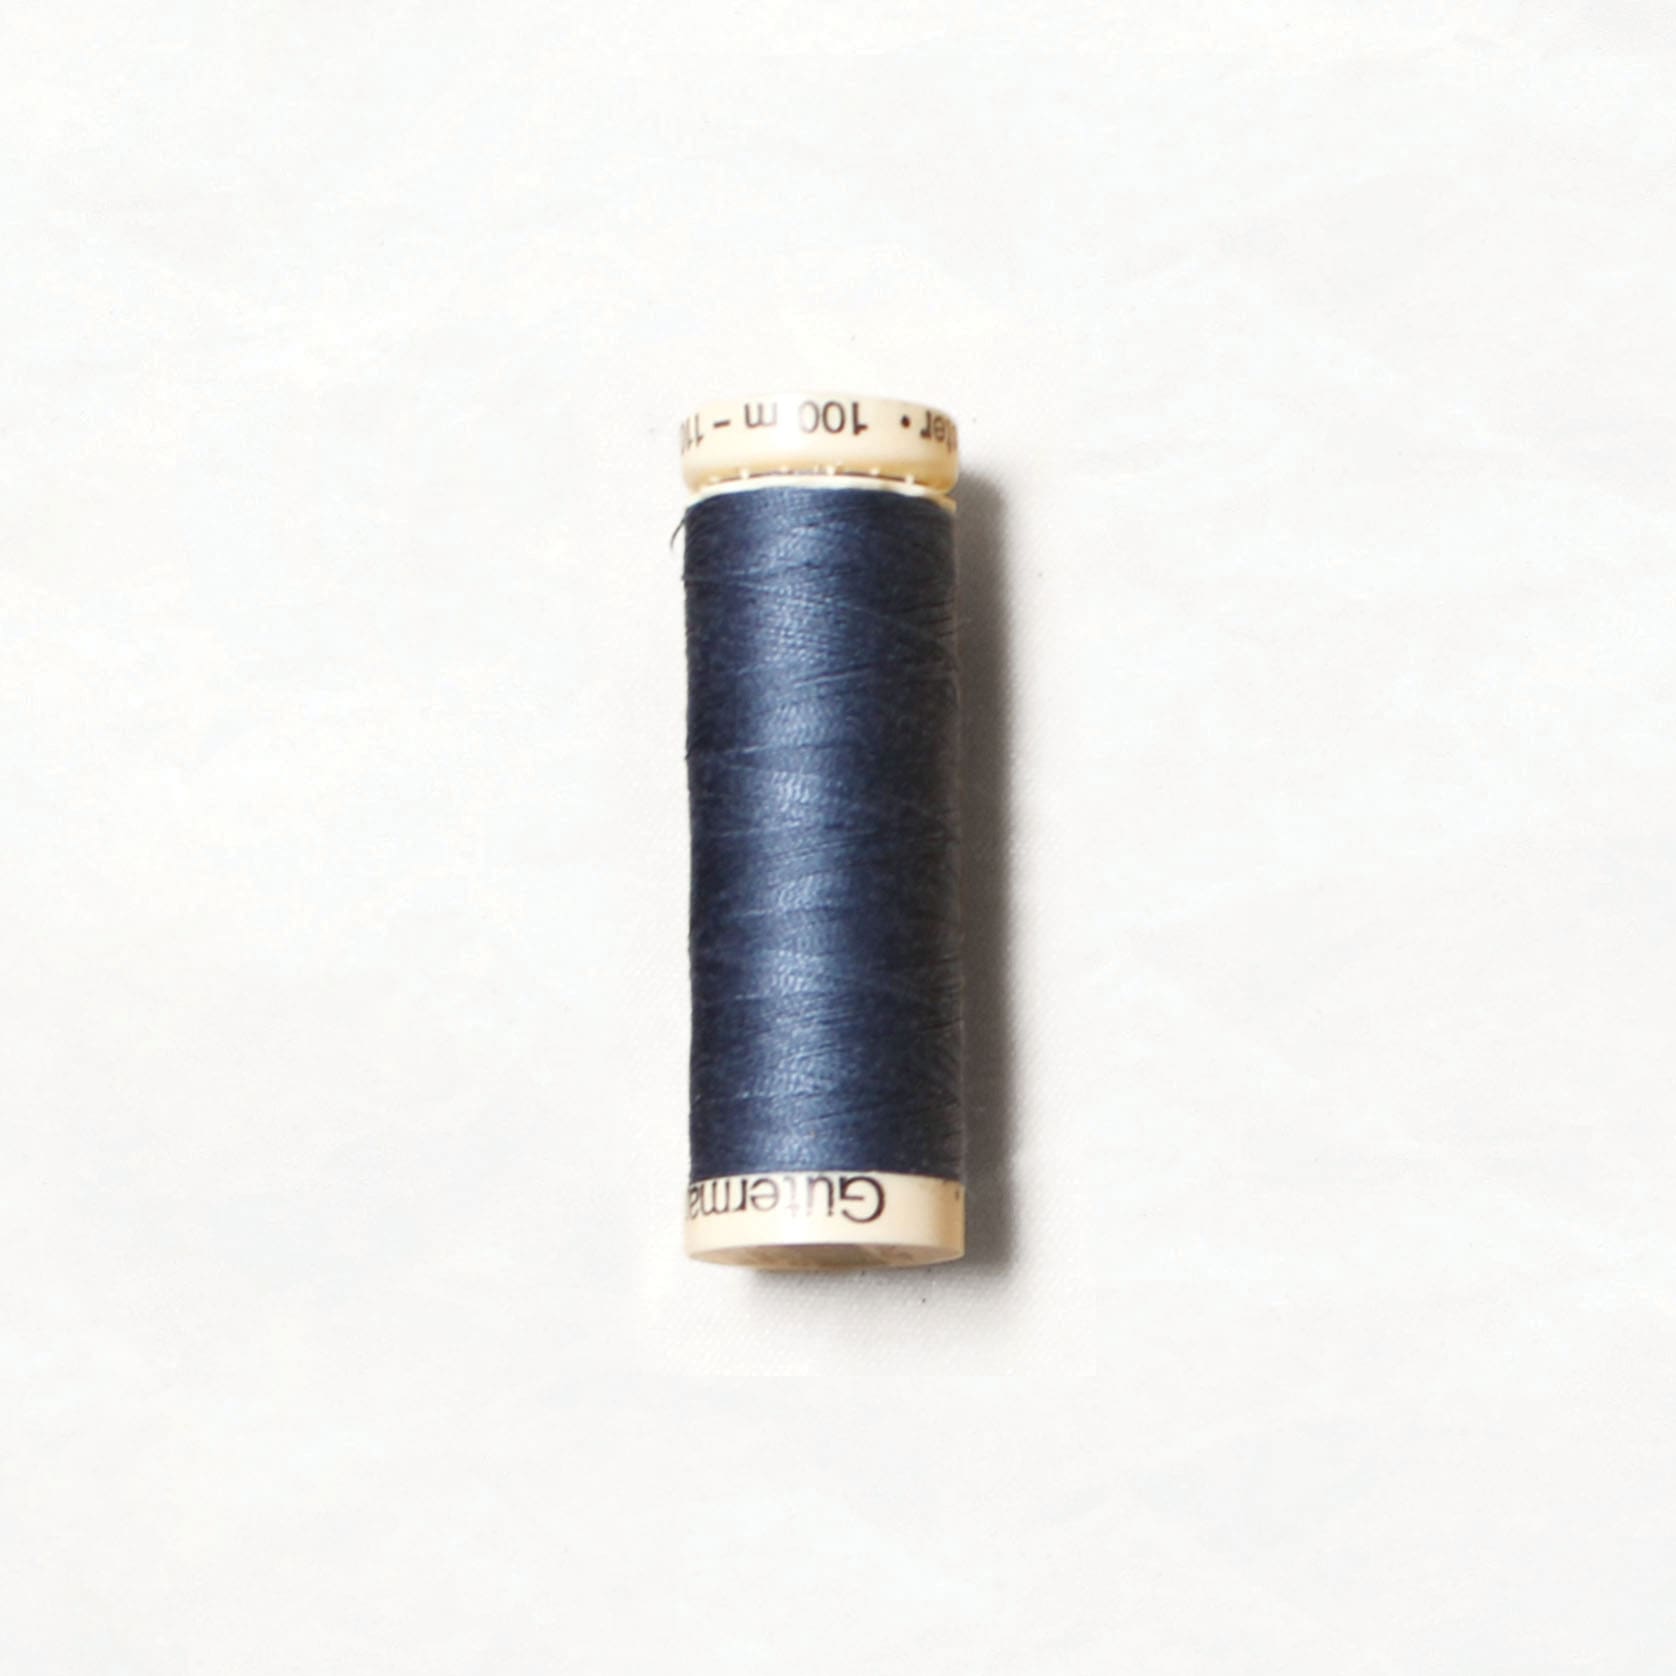 Hand-Sewing 101: Choosing the Right Thread – Fibr & Cloth Studio